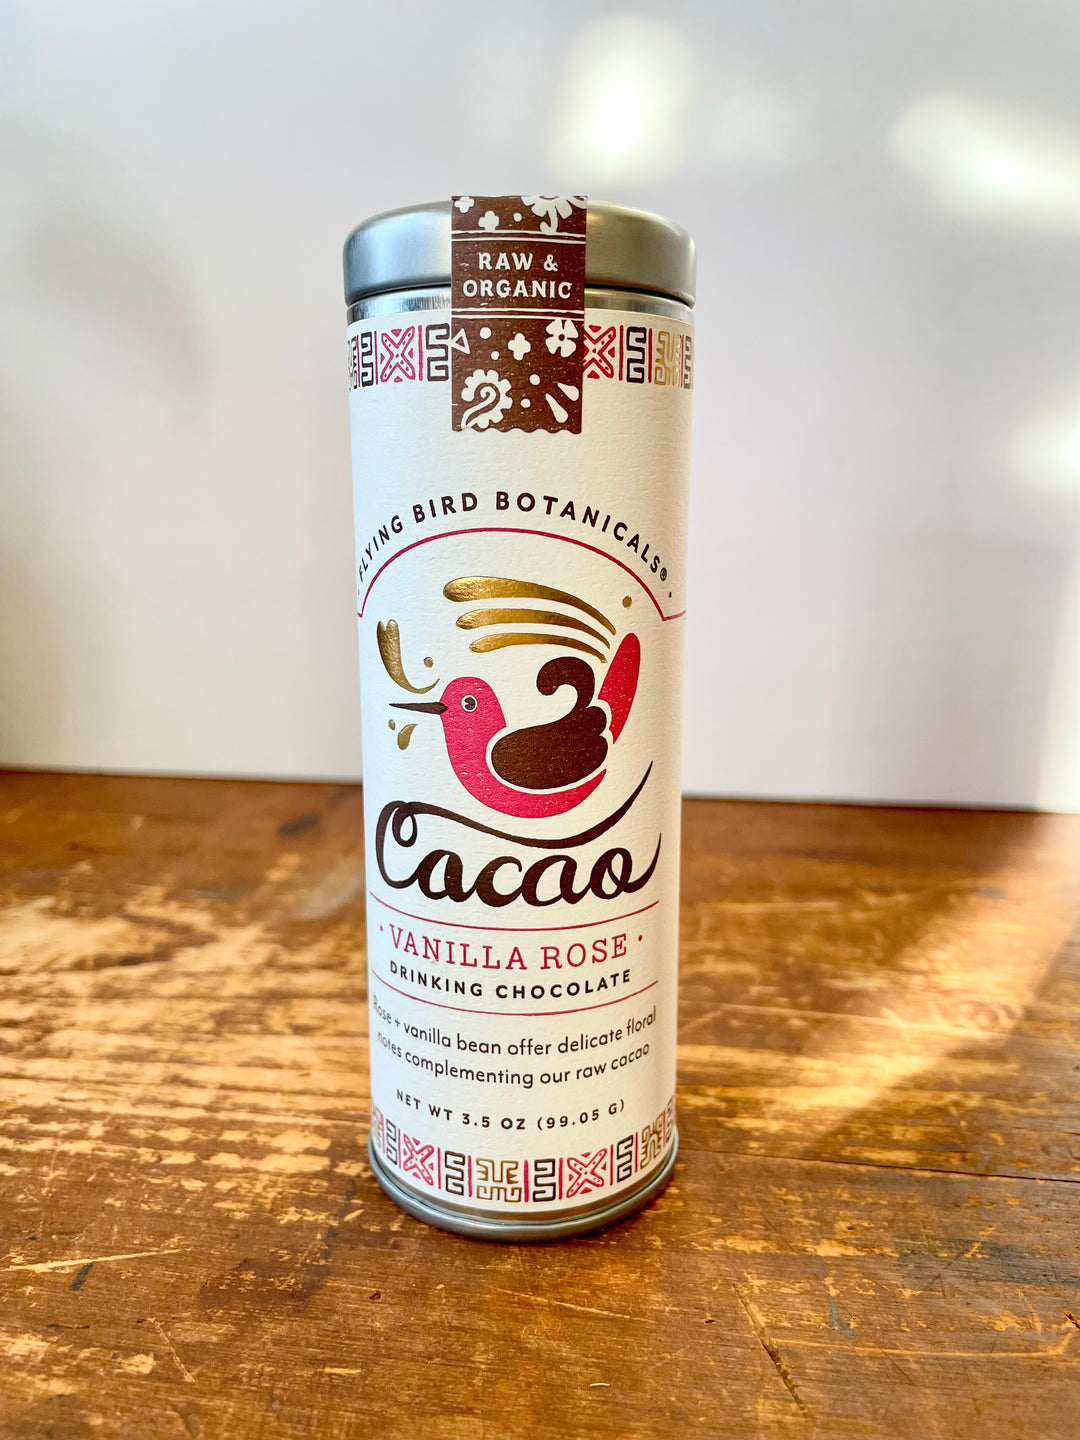 Organic Vanilla Rose Drinking Chocolate (Cacao) Tin